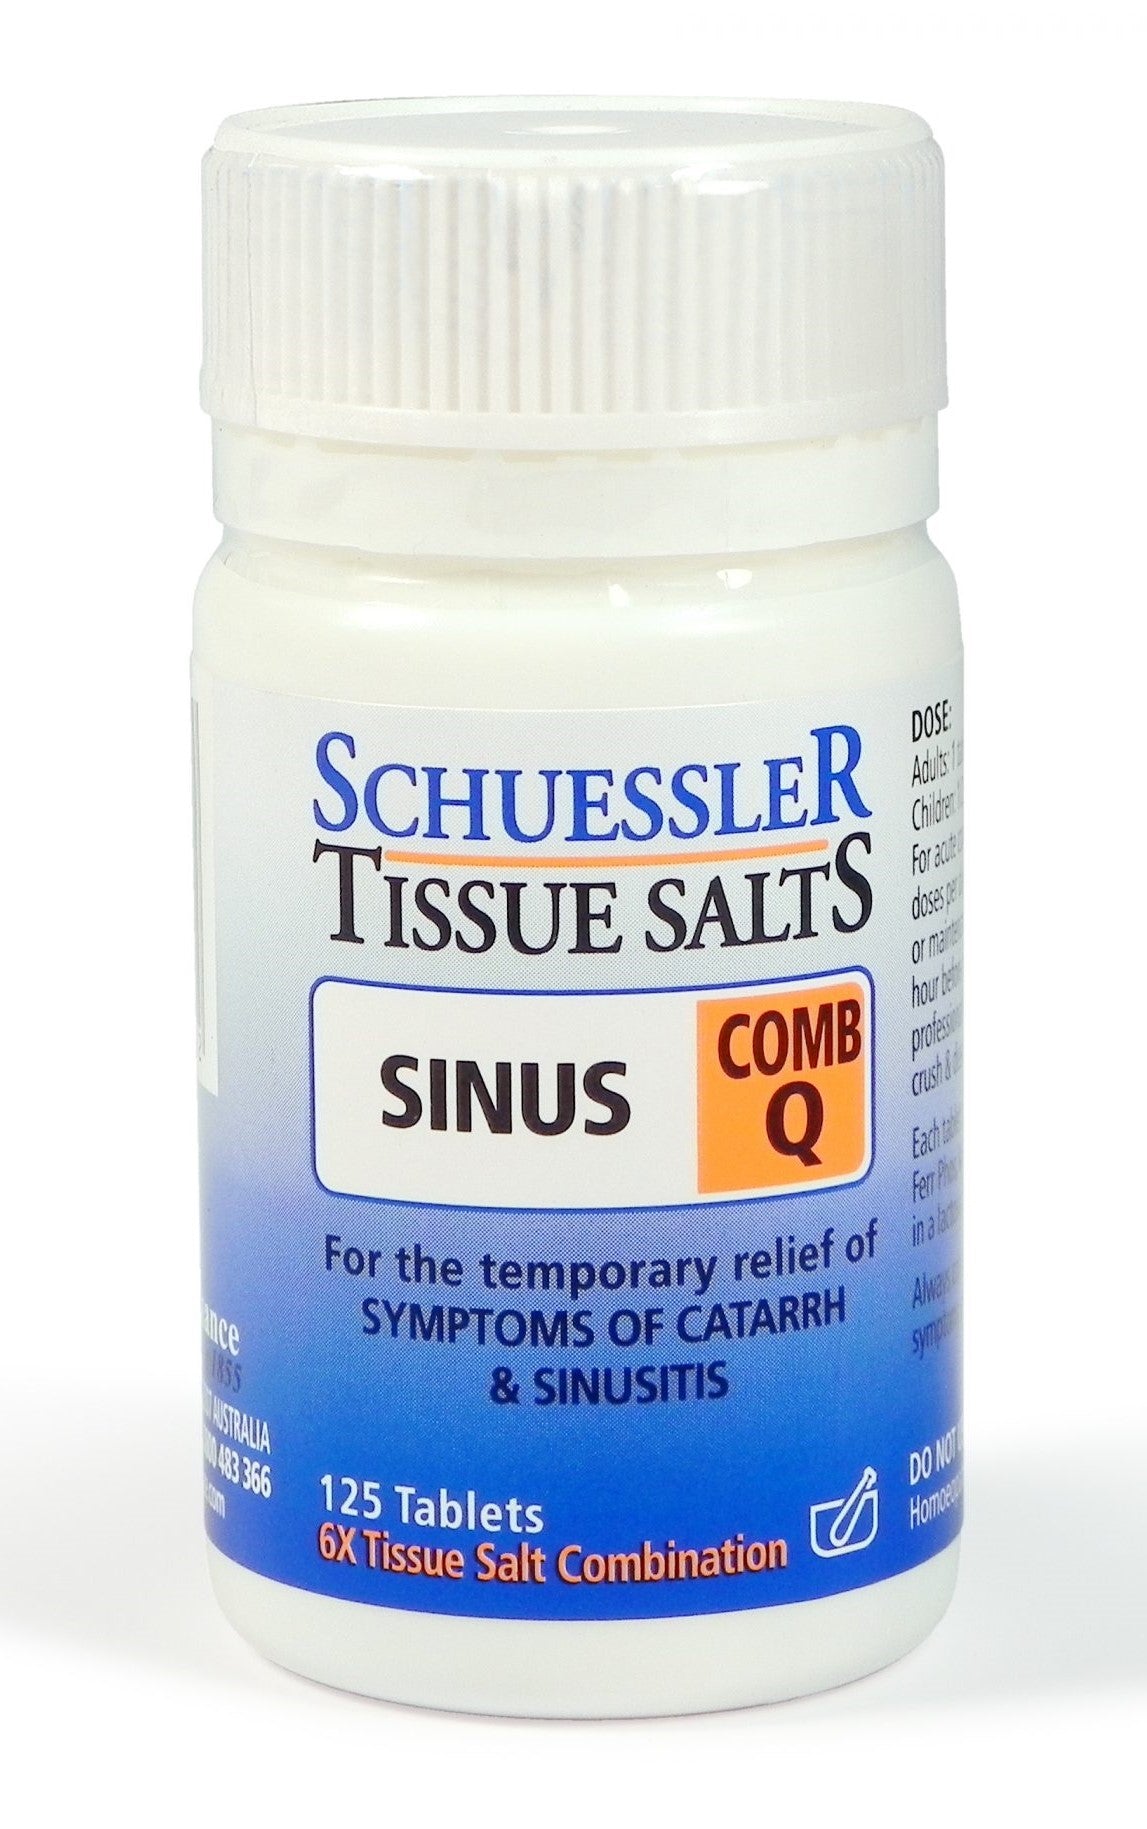 Schuessler Tissue Salts Sinus Comb Q Tablets 125